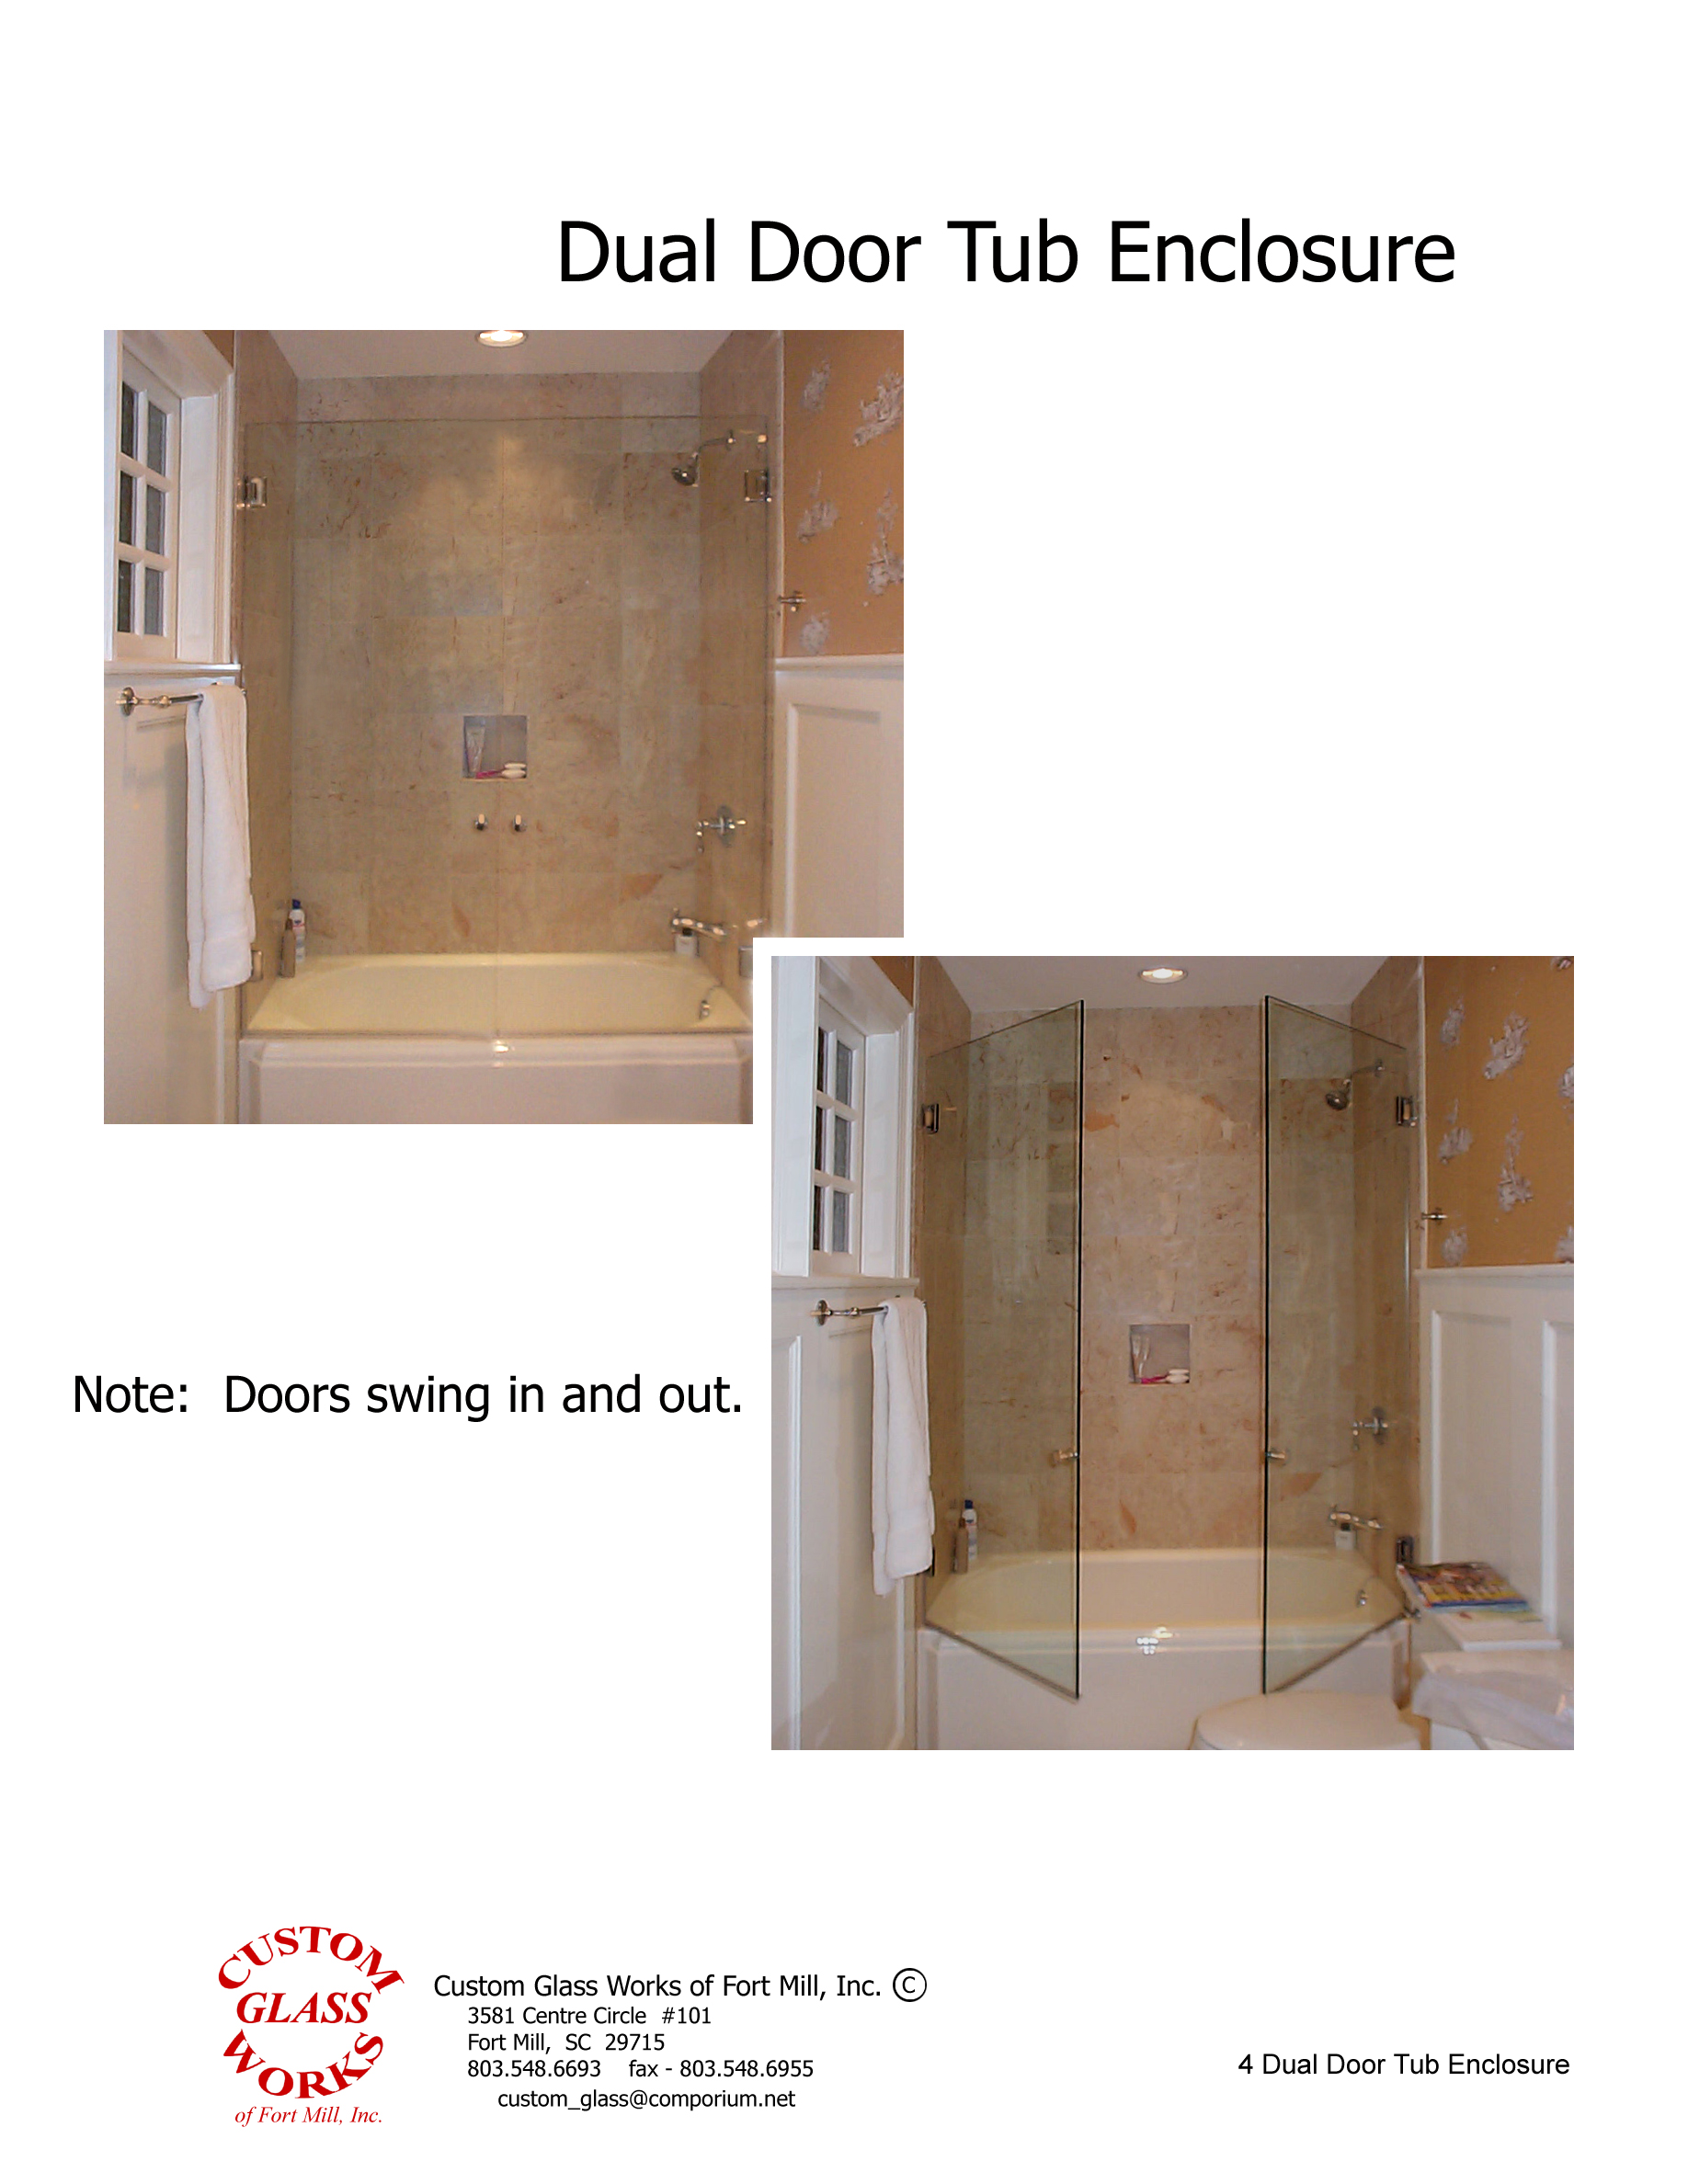 4 Dual Door Tub Enclosure